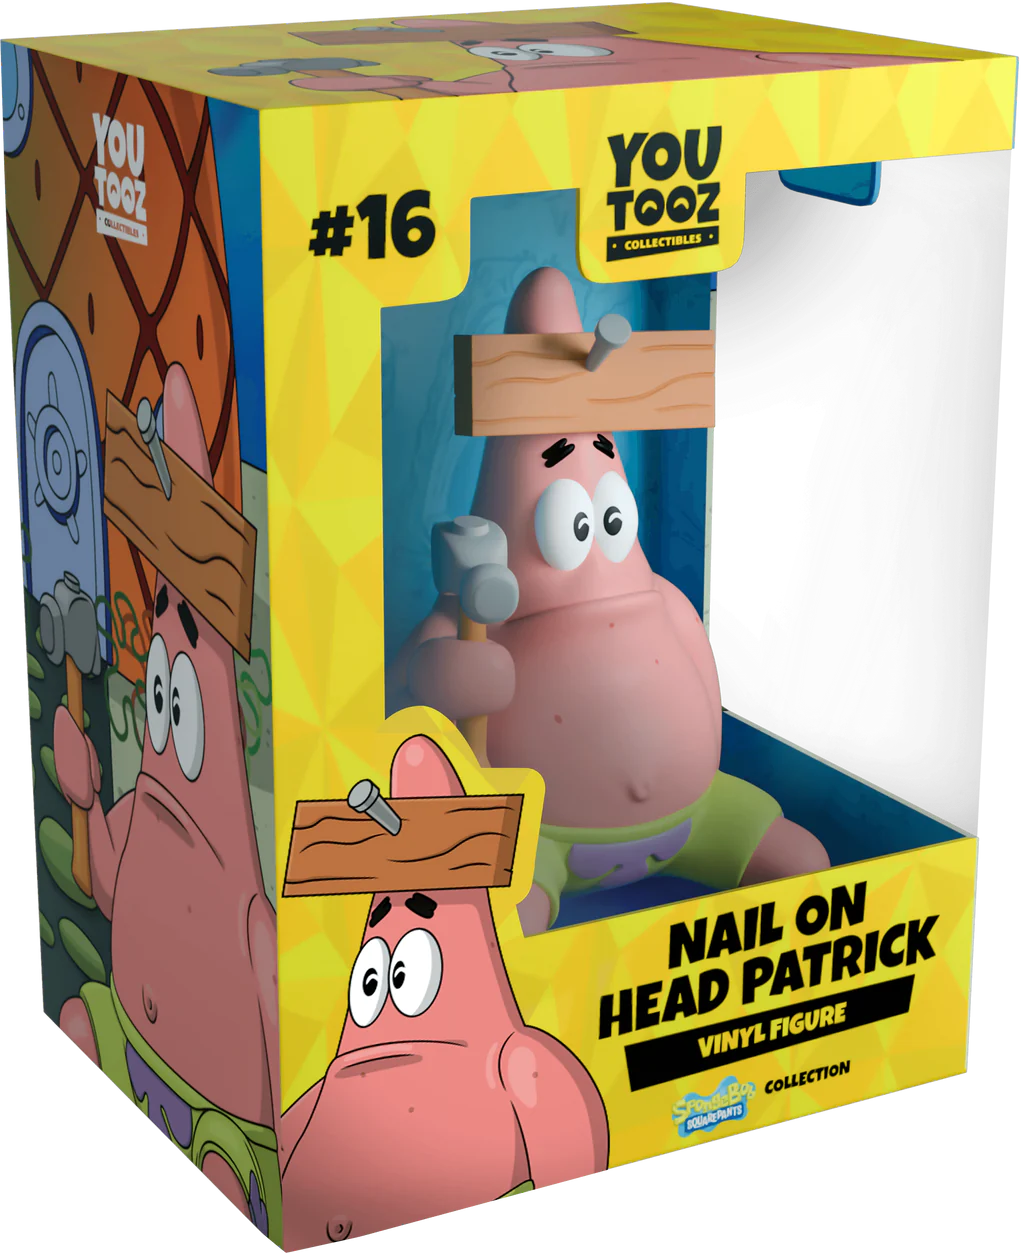 Spongebob Squarepants Nail on Head Patrick Star Youtooz Vinyl Figure